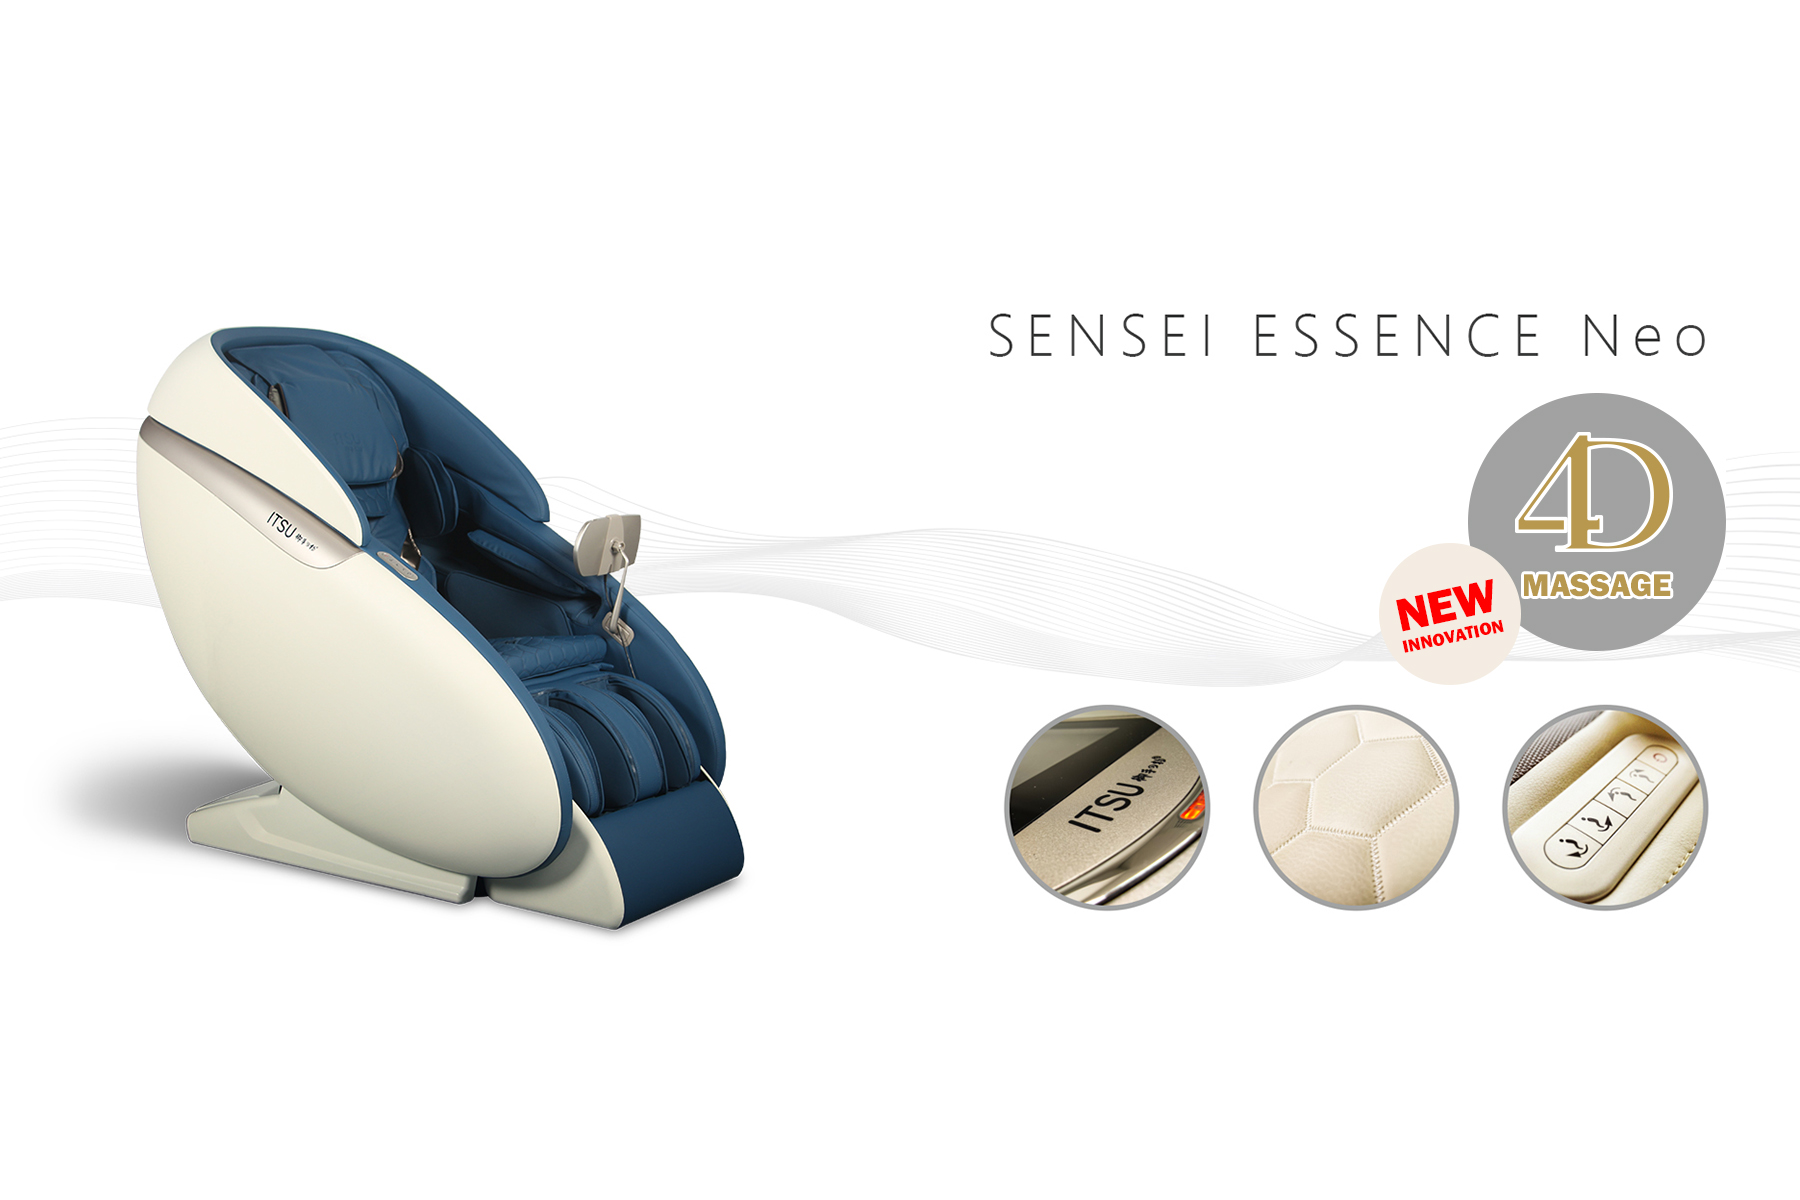 Massage Chair Sensei Essence Neo Itsu World Available Across Indonesia Malaysia Hong Kong And New Zealand